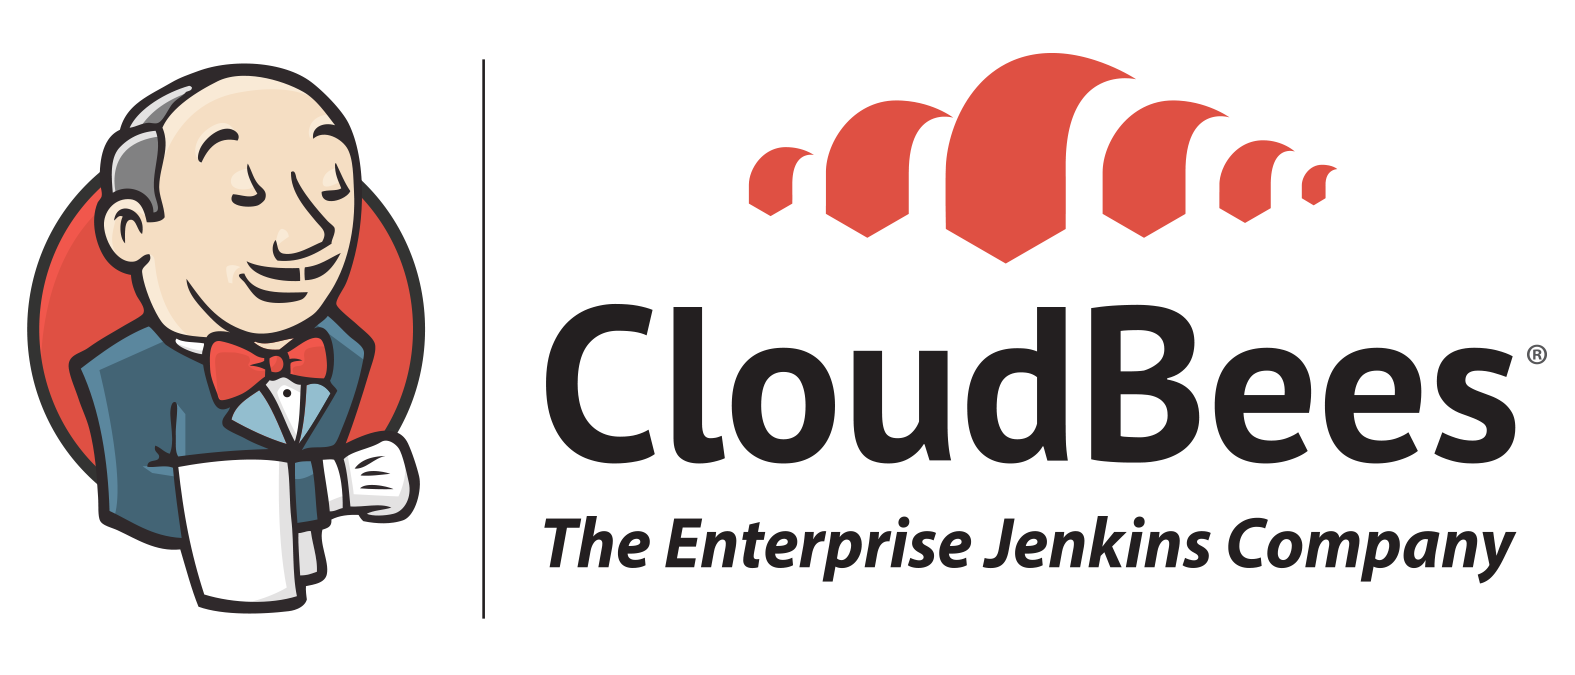 cloudbees-logo-transparent.png